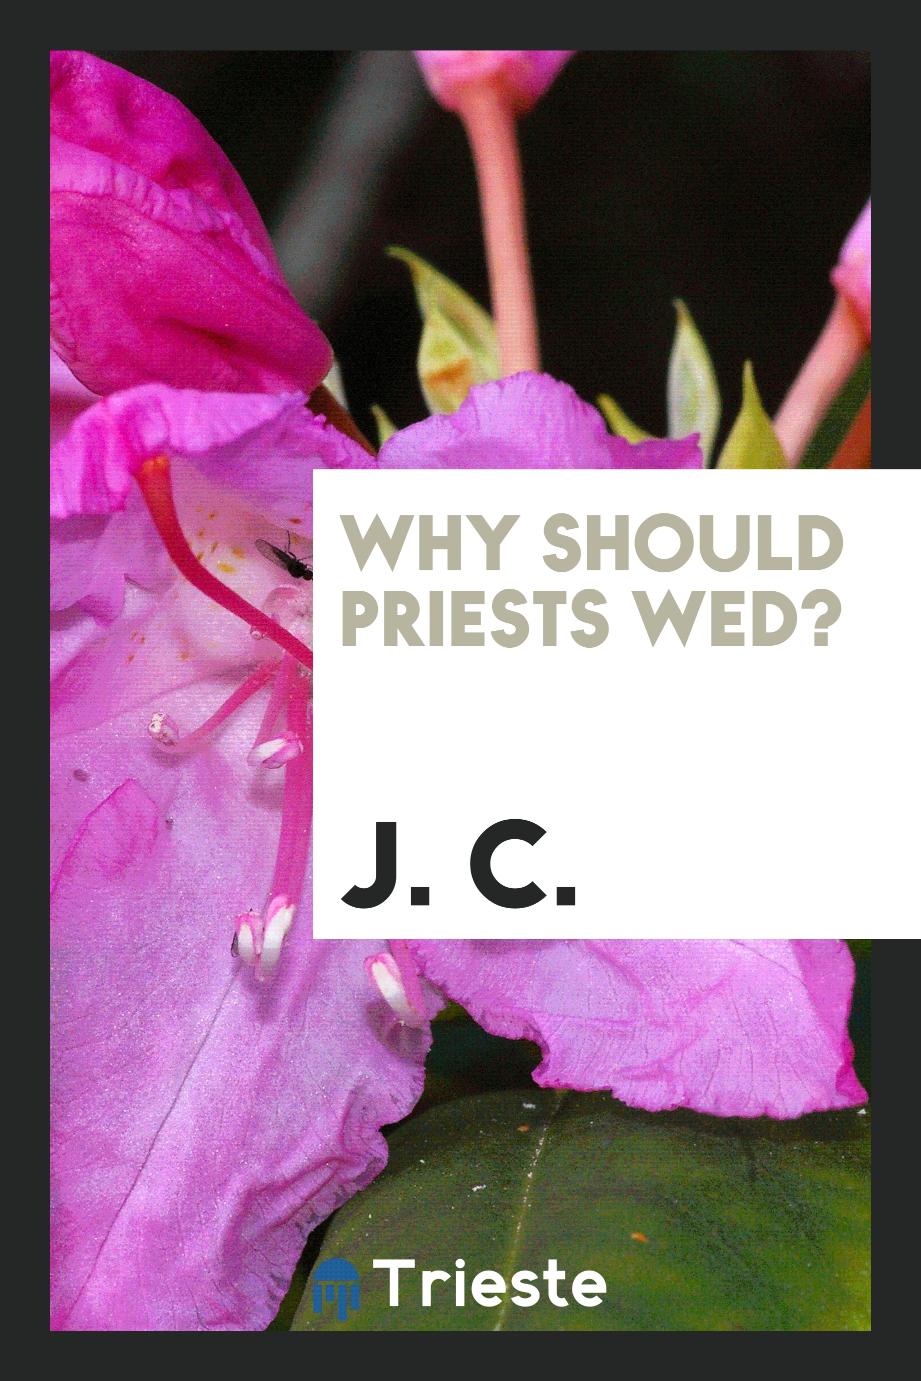 Why should priests wed?